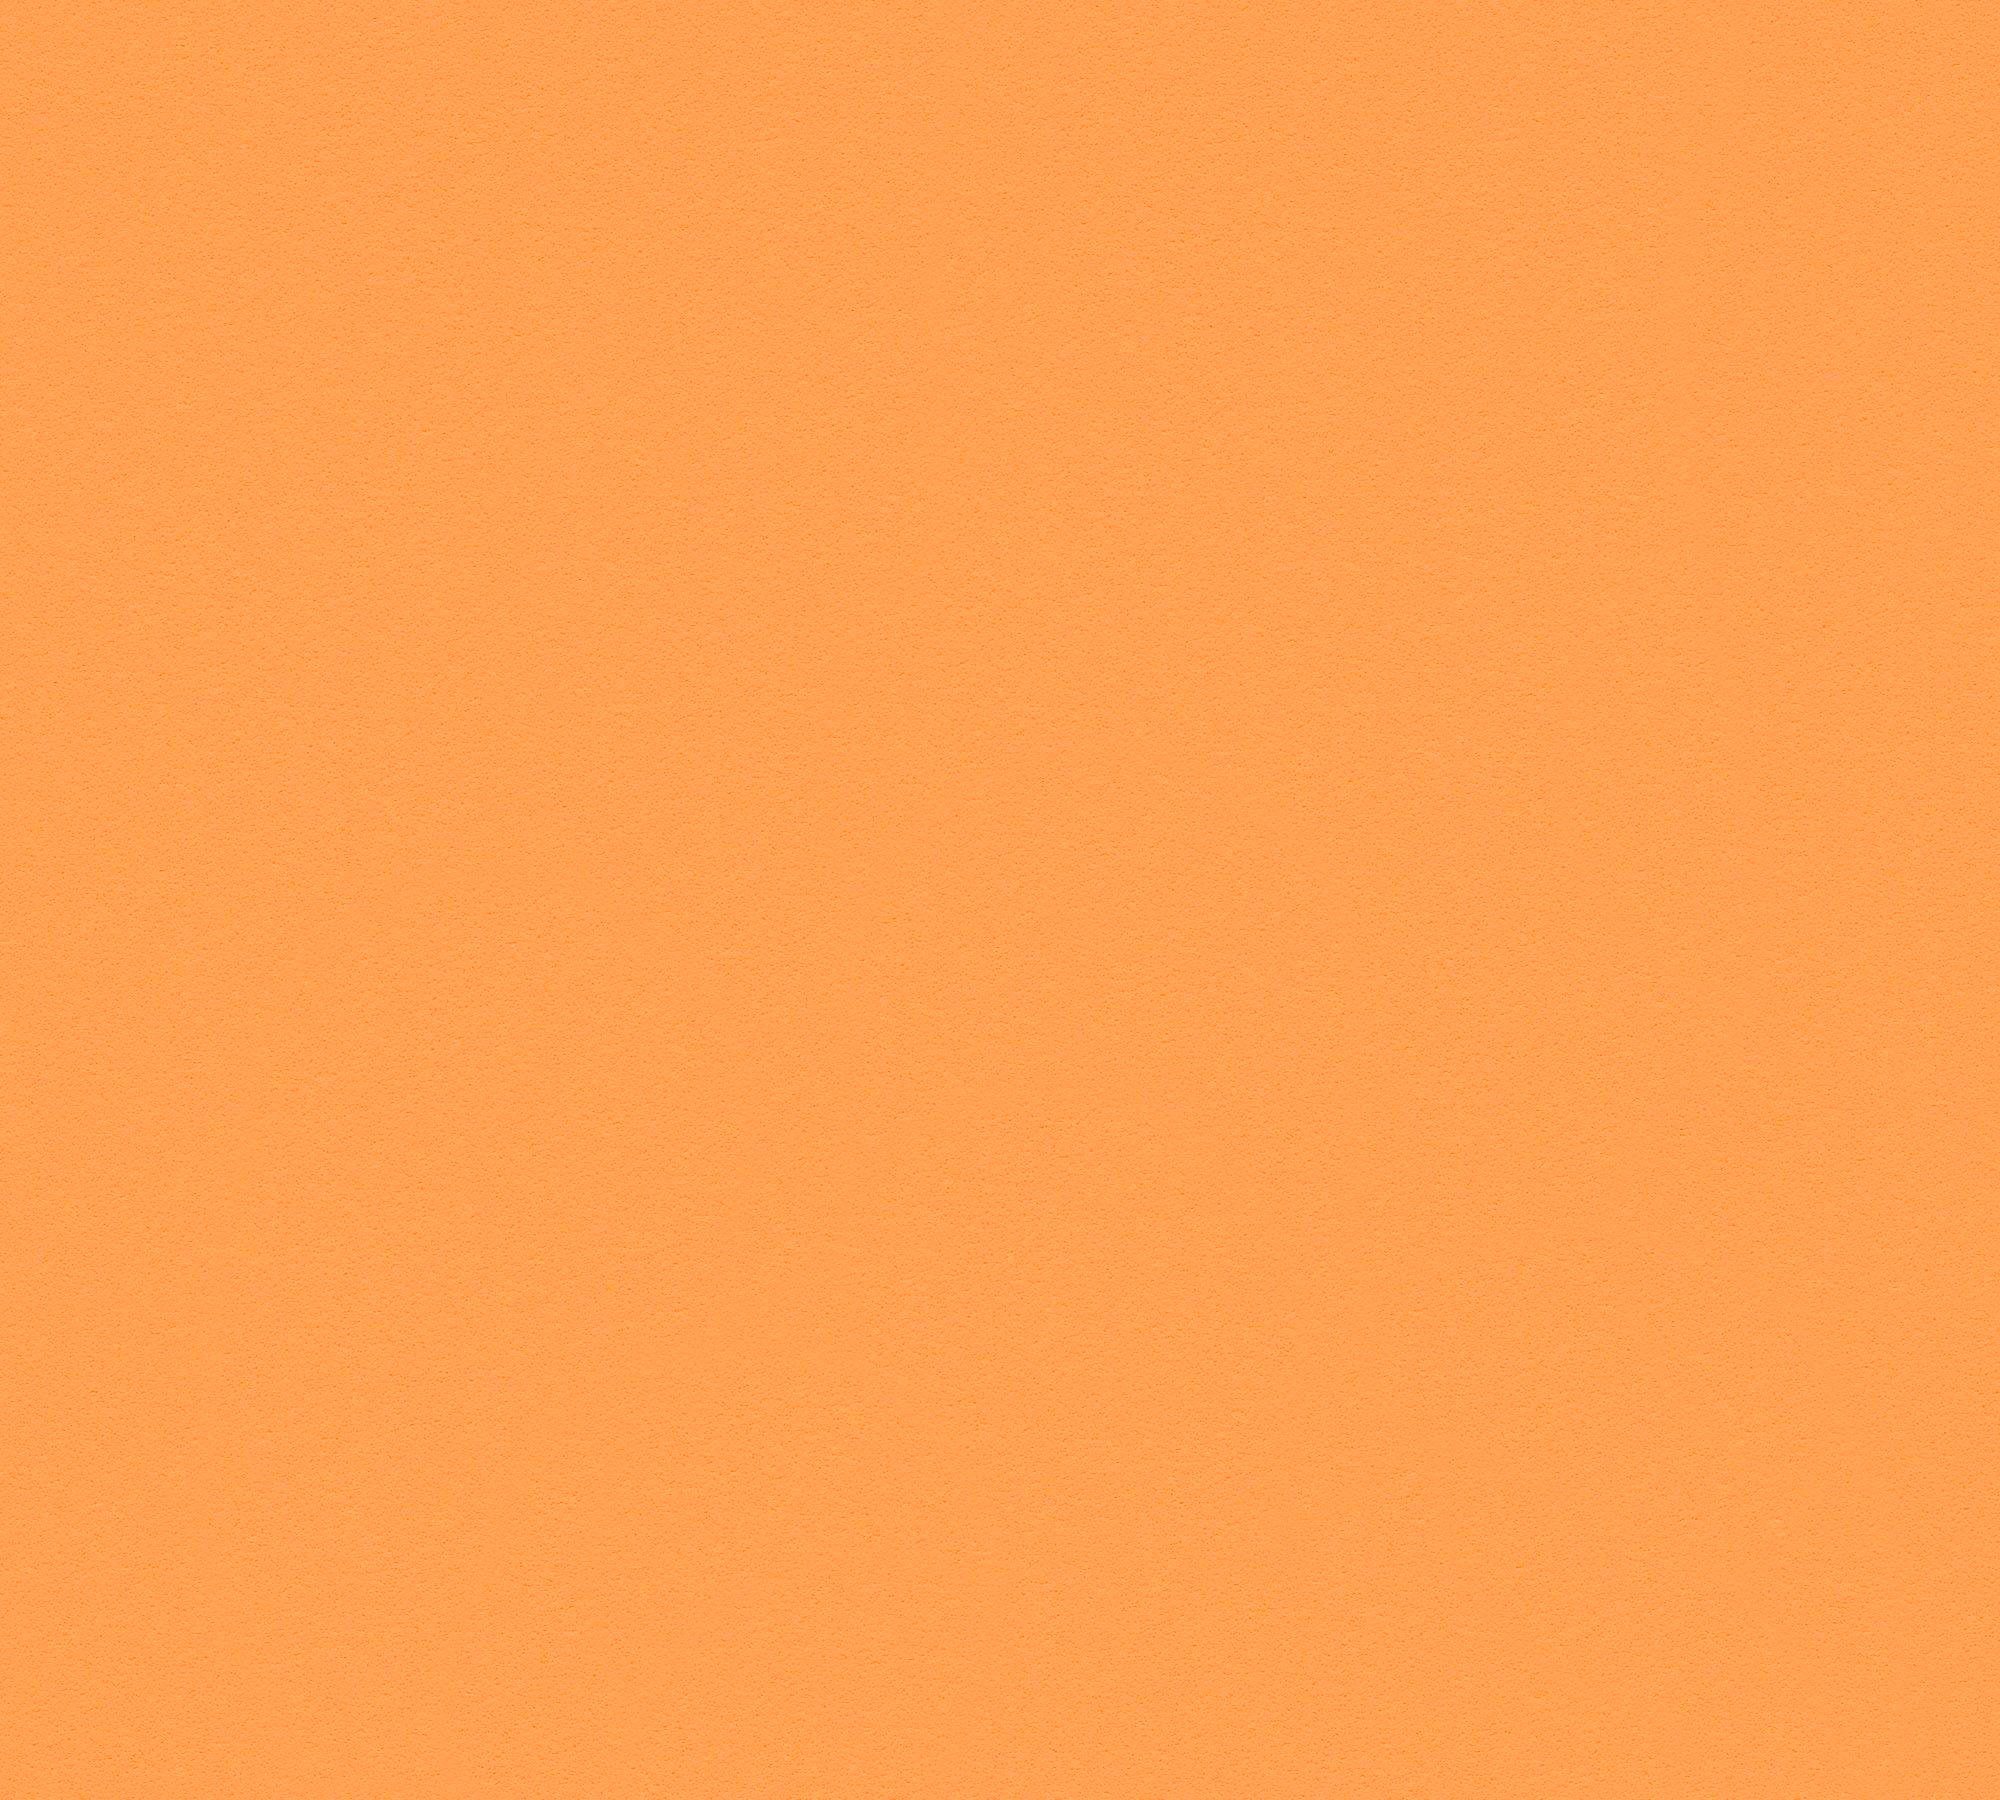 Création Tapete einfarbig, Vliestapete Meistervlies glatte orange Wand, die Uni walls uni, Einfarbig A.S. living